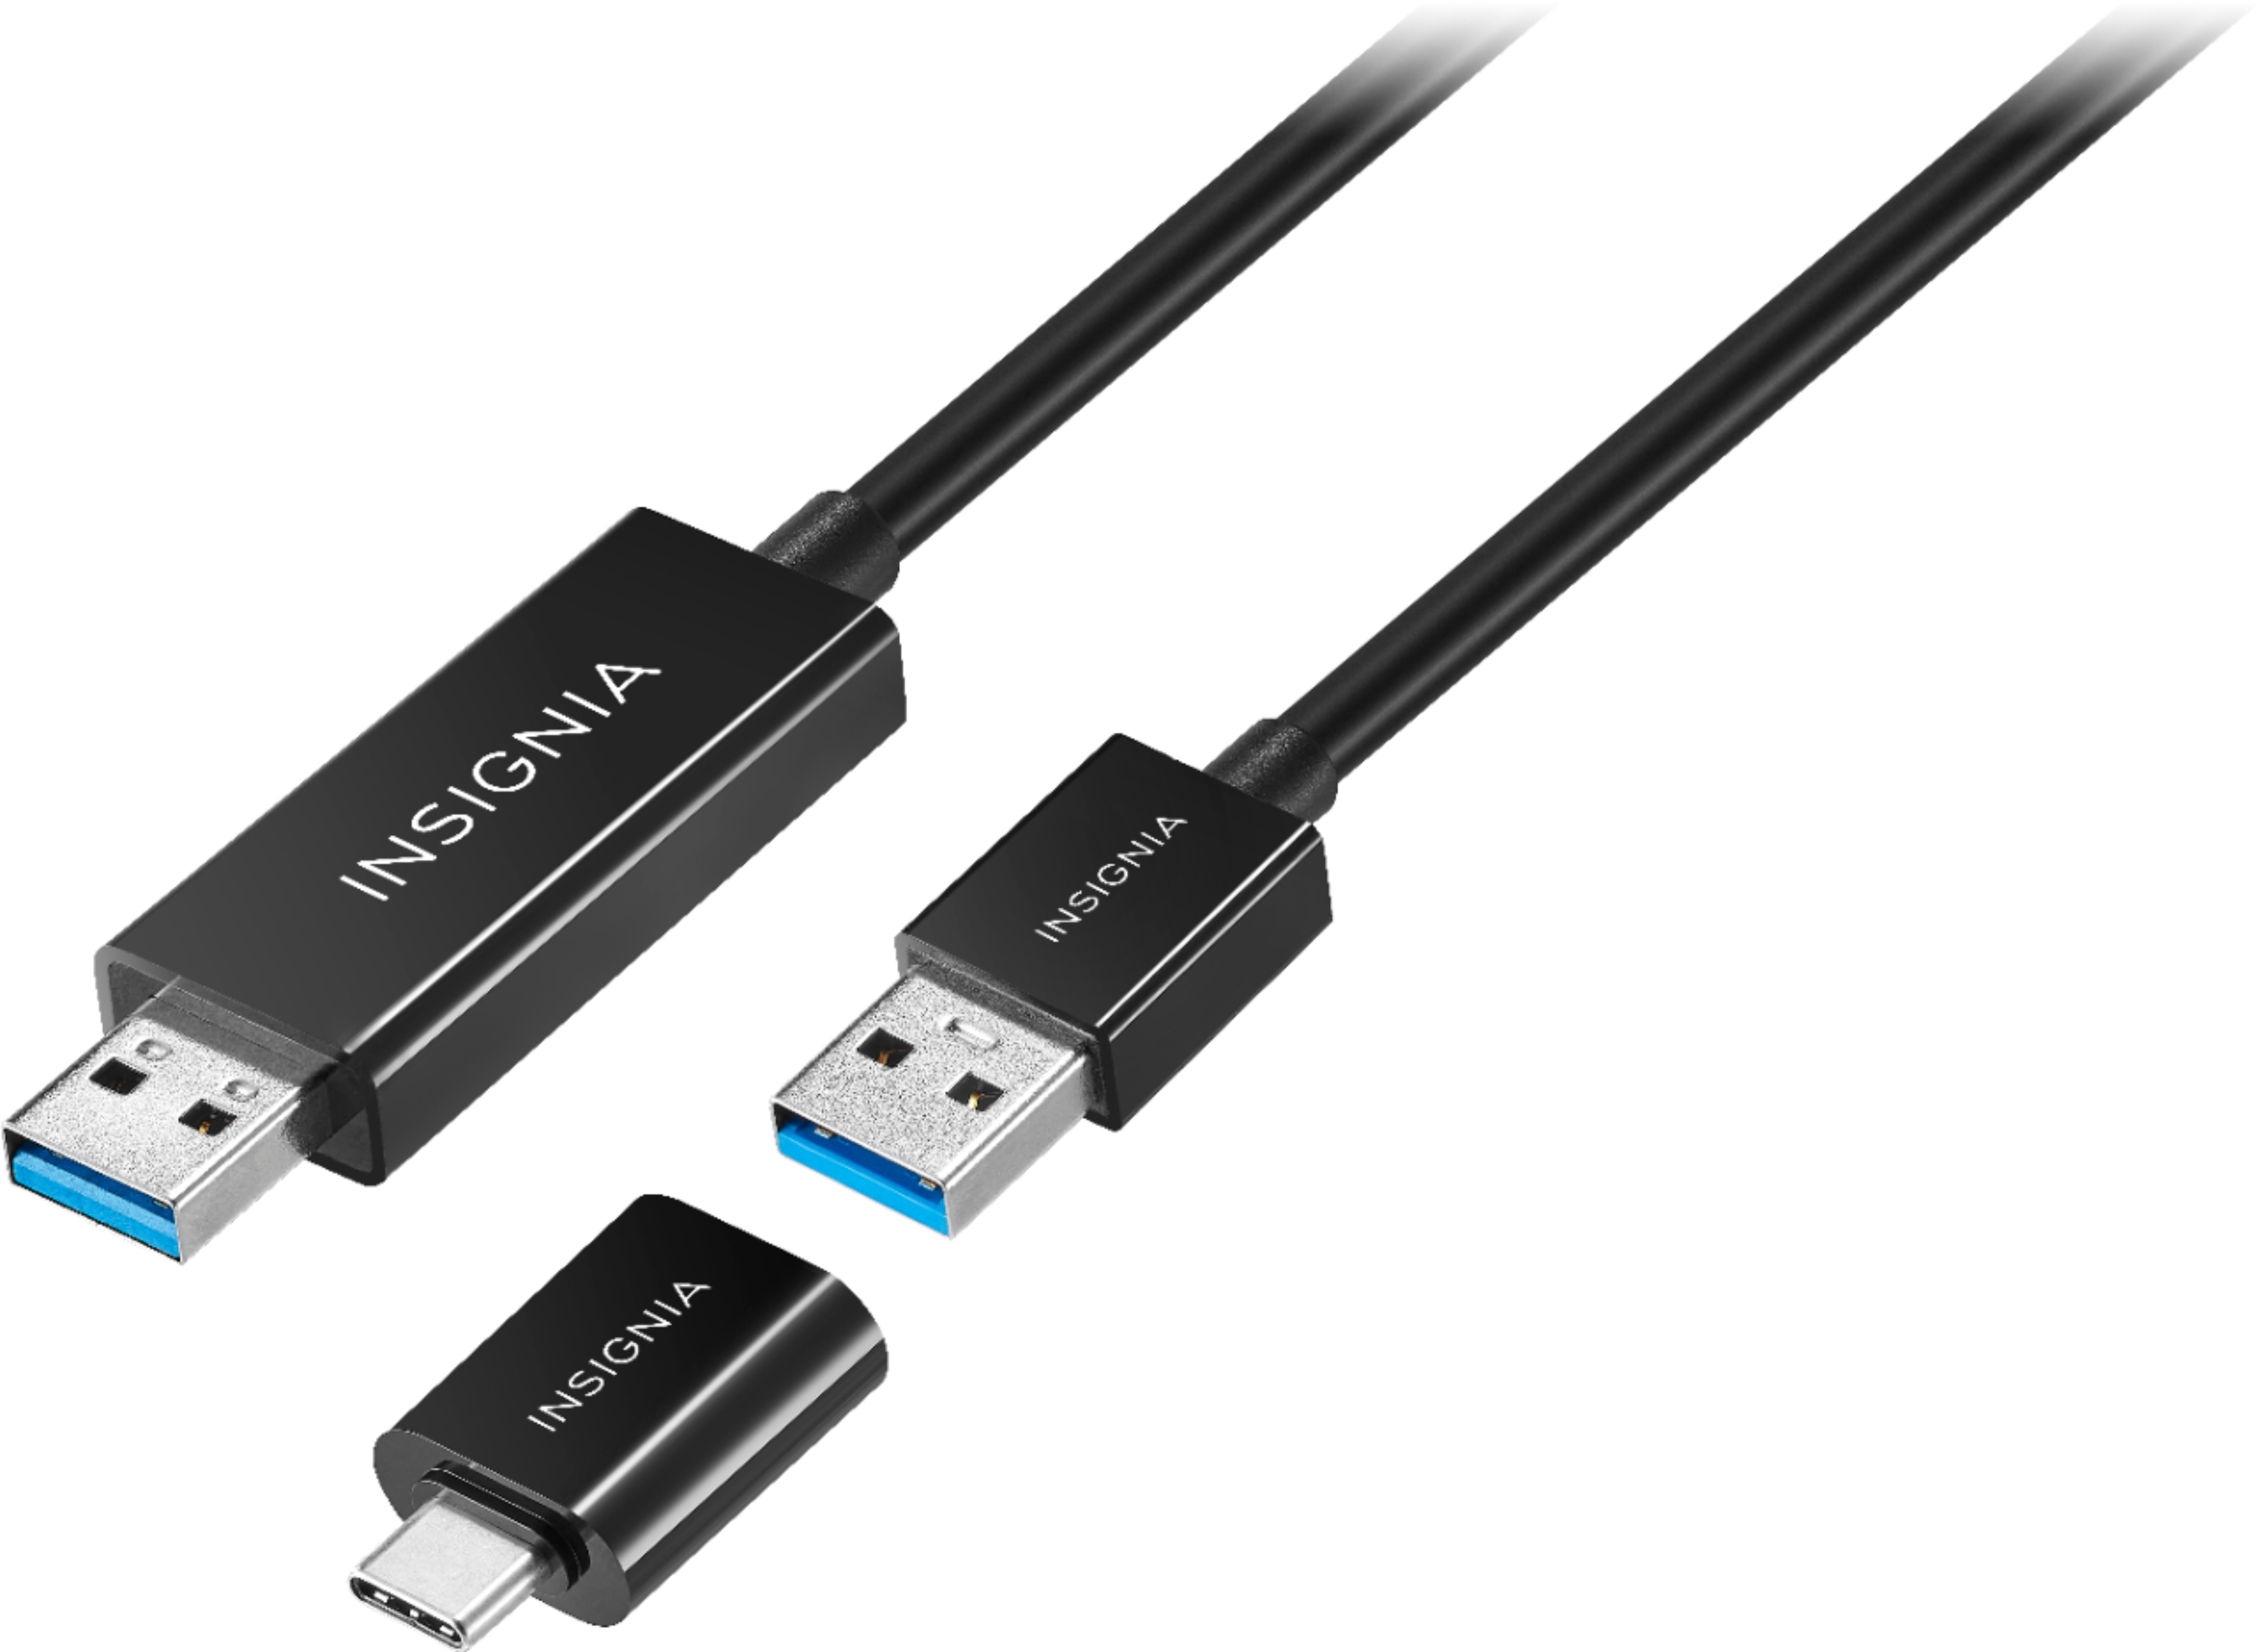 Insignia™ USB 3.0 Transfer Cable Black NS-PCK336C - Buy